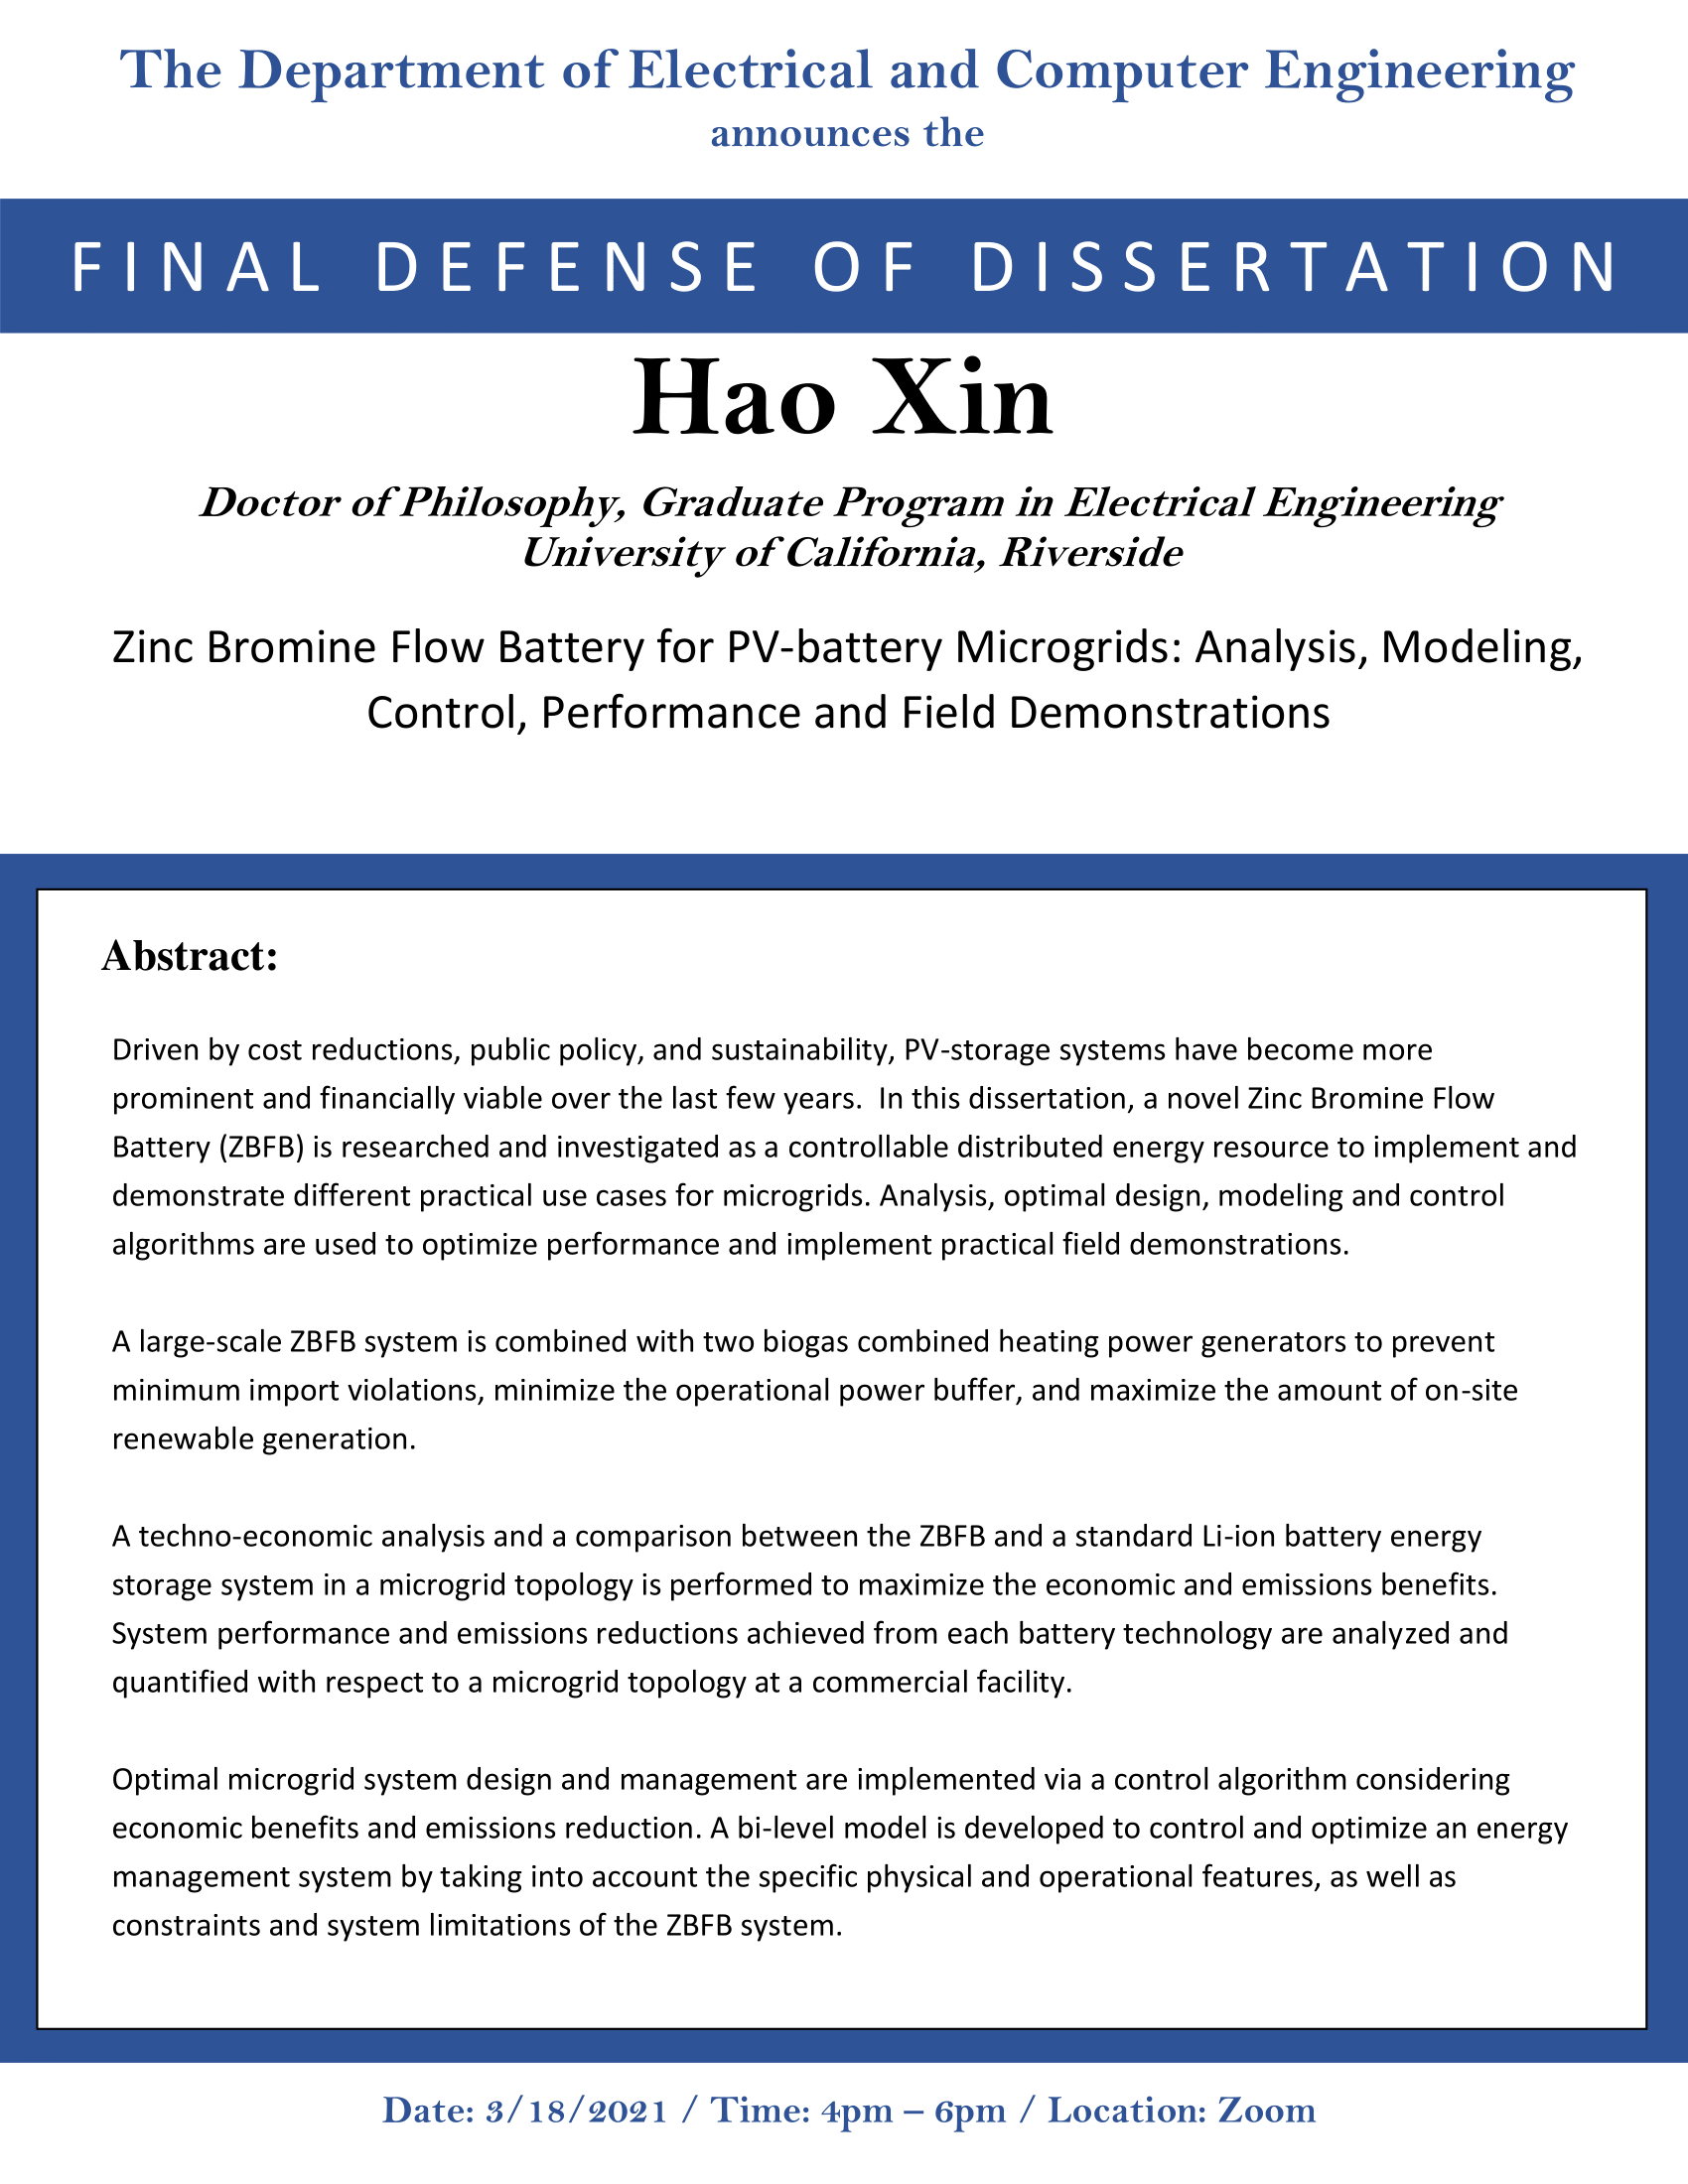 XIN, Hao PHD Dissertation Flyer